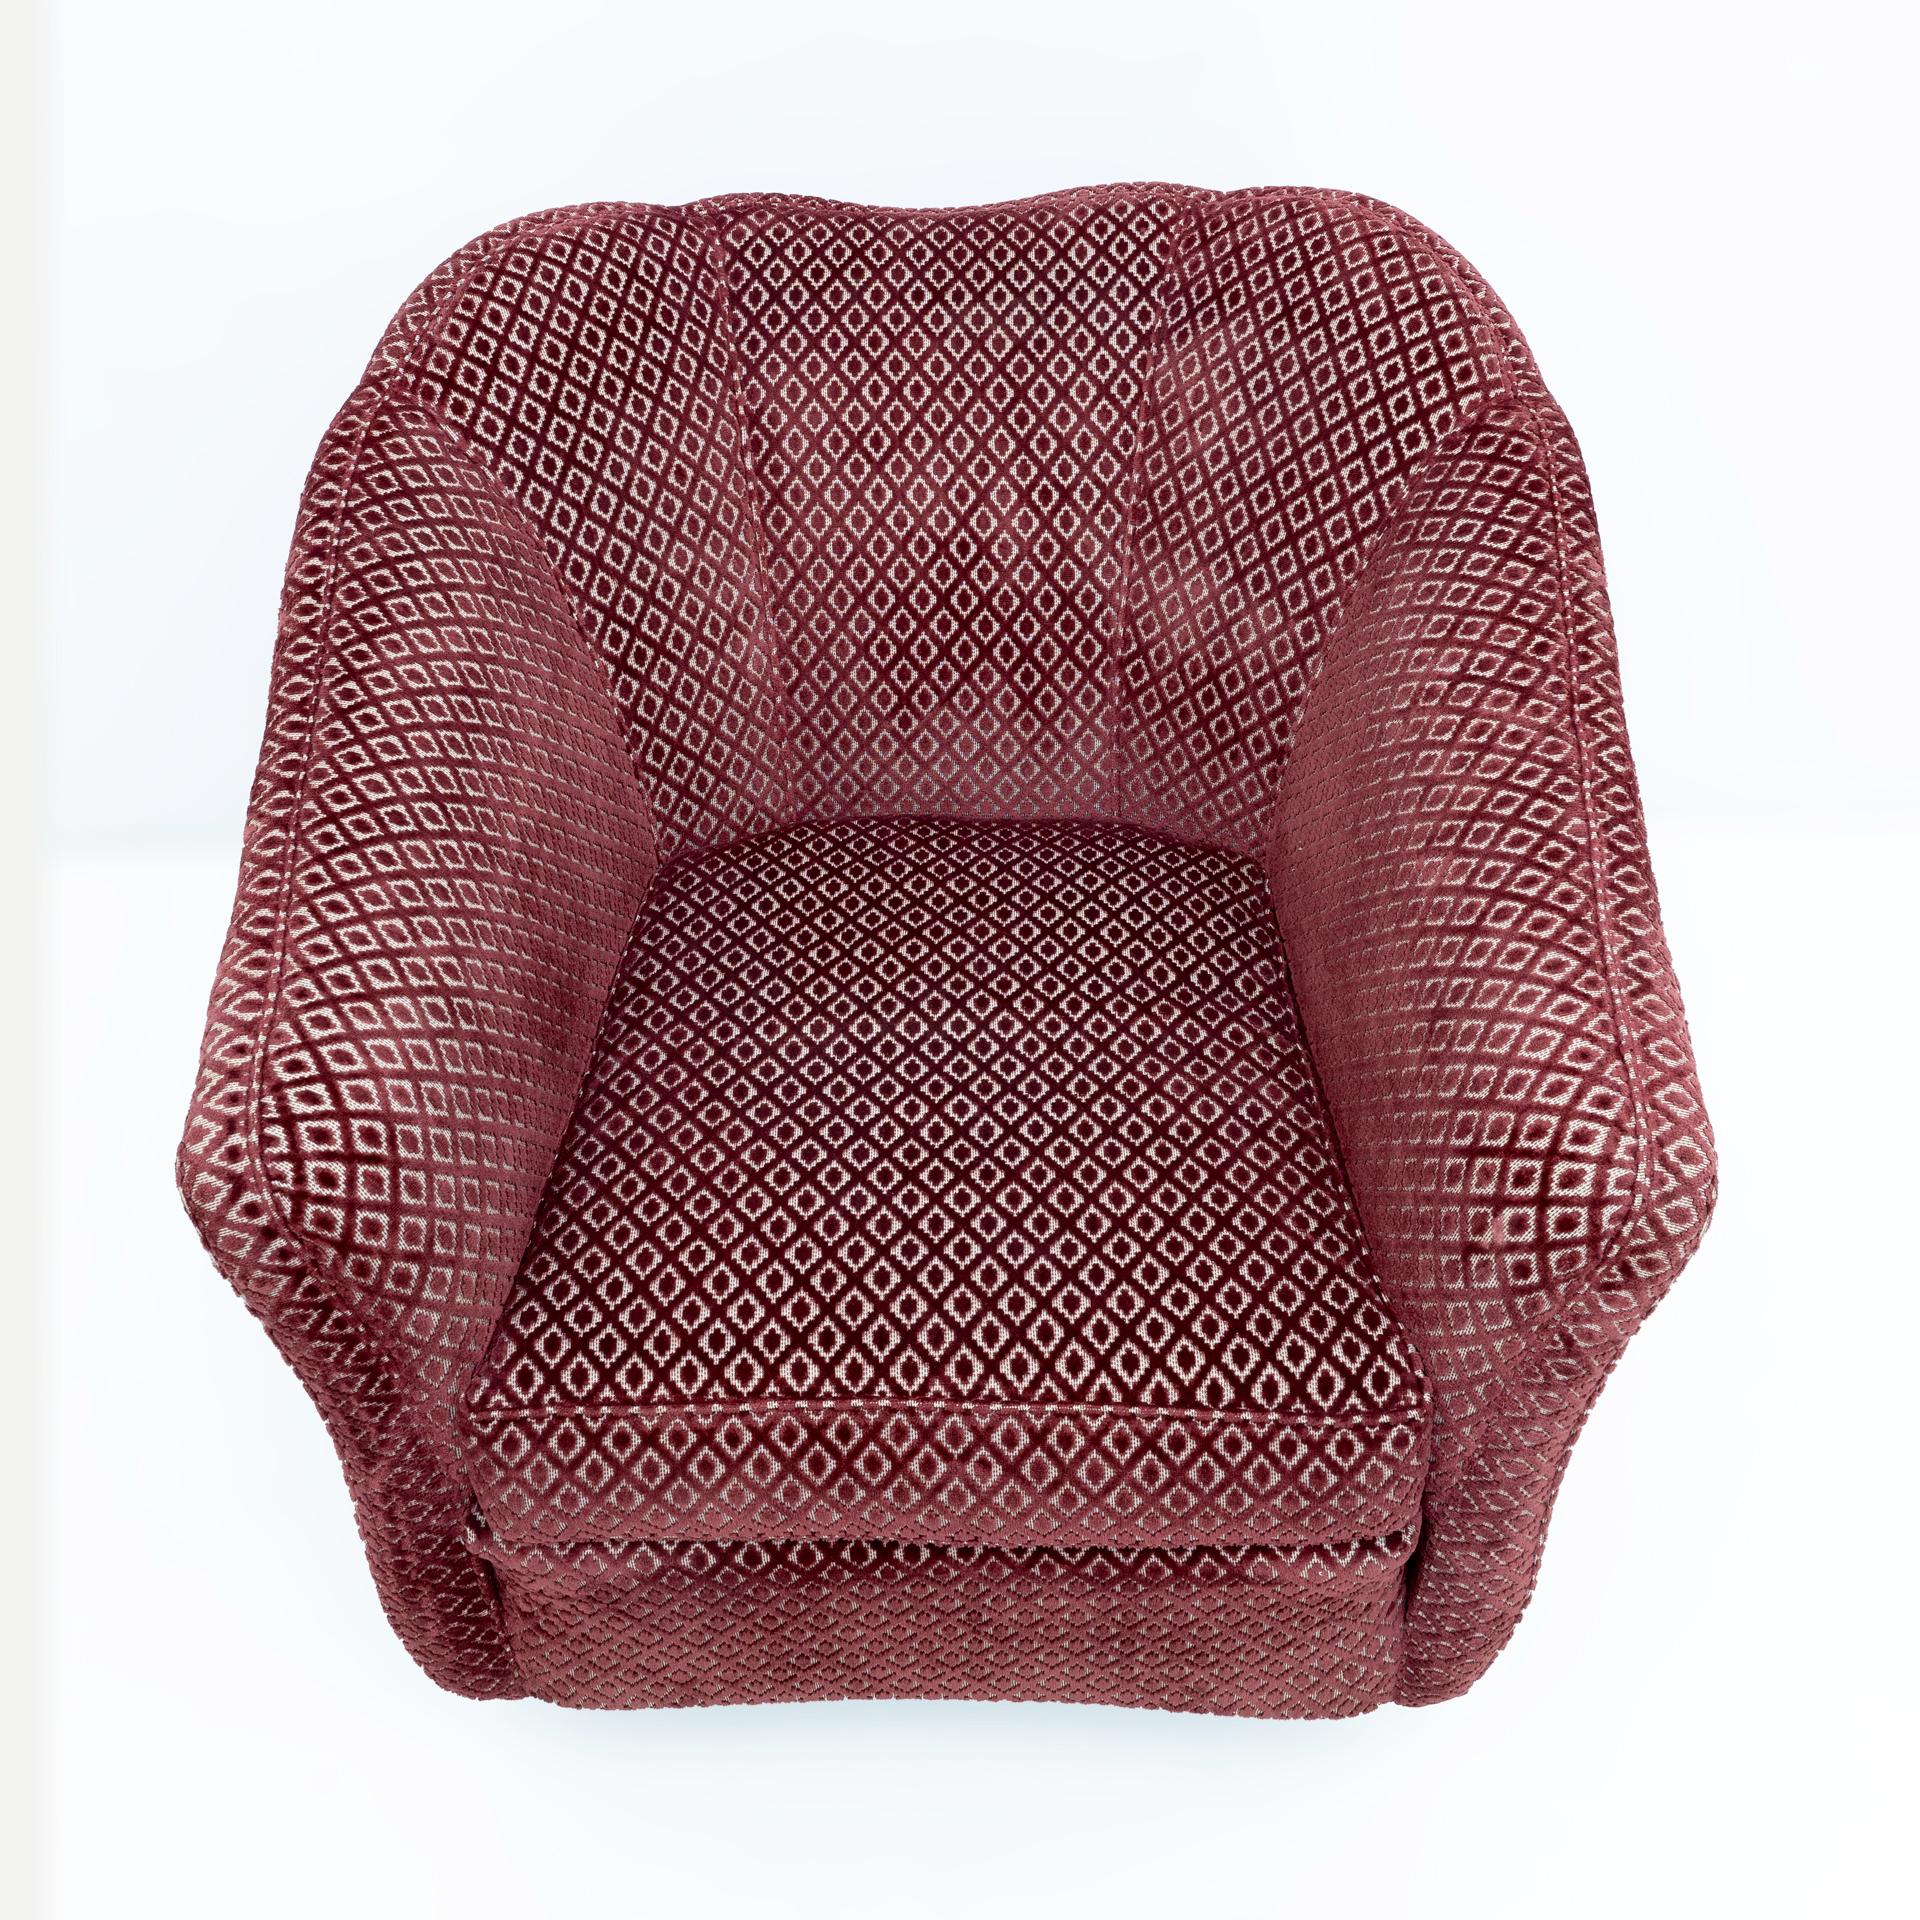 Pair of Gio Ponti Mid-Century Modern Velvet Armchairs for Casa e Giardino, 1950s For Sale 4